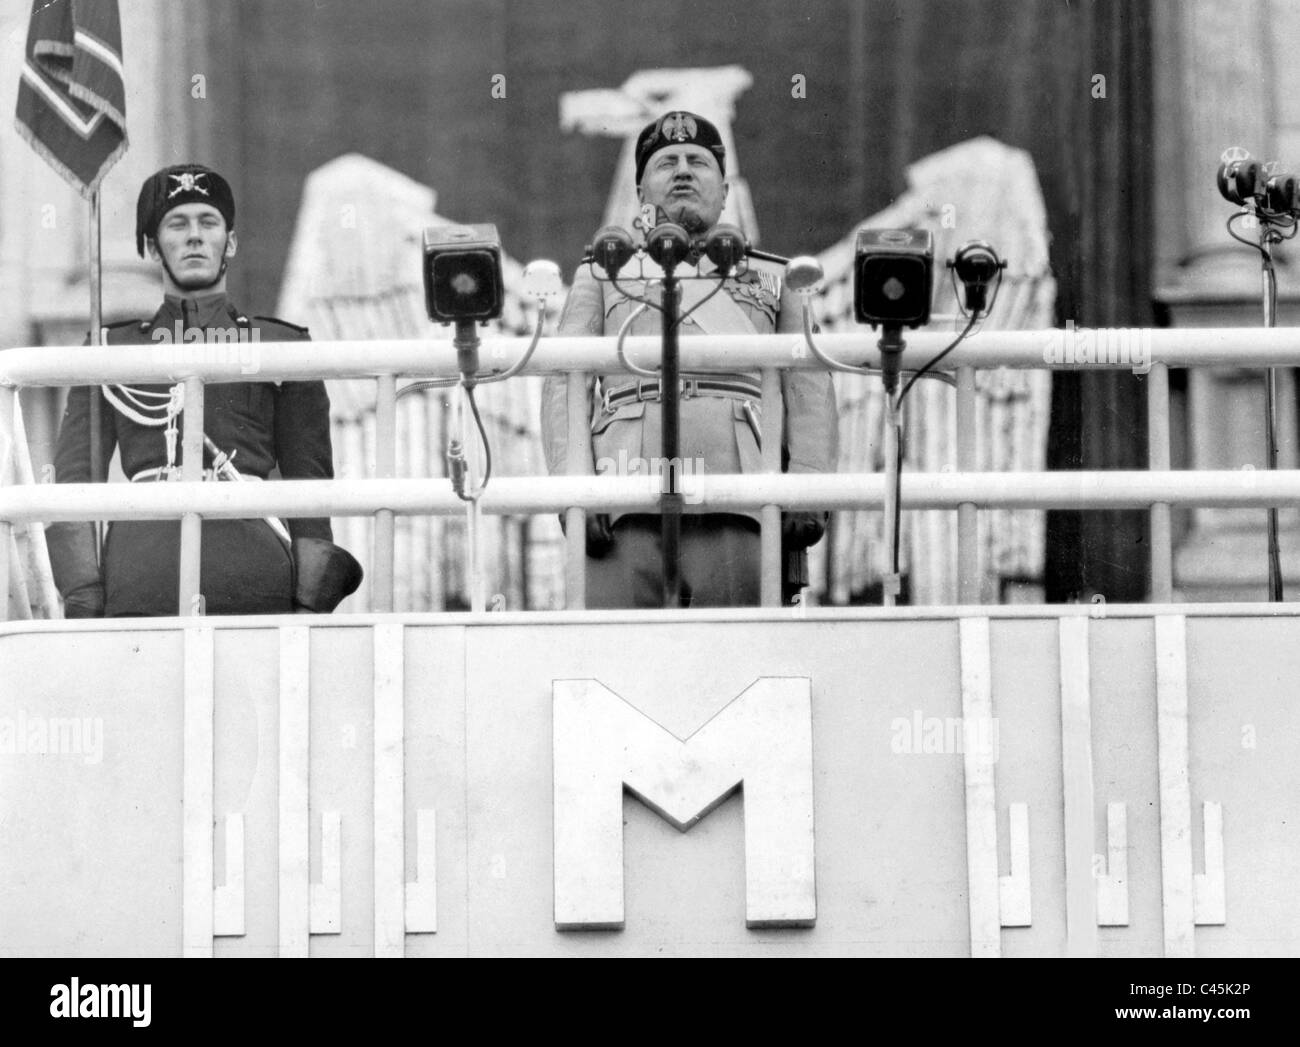 Benito Mussolini pendant une speecjh, photo non datée. Banque D'Images